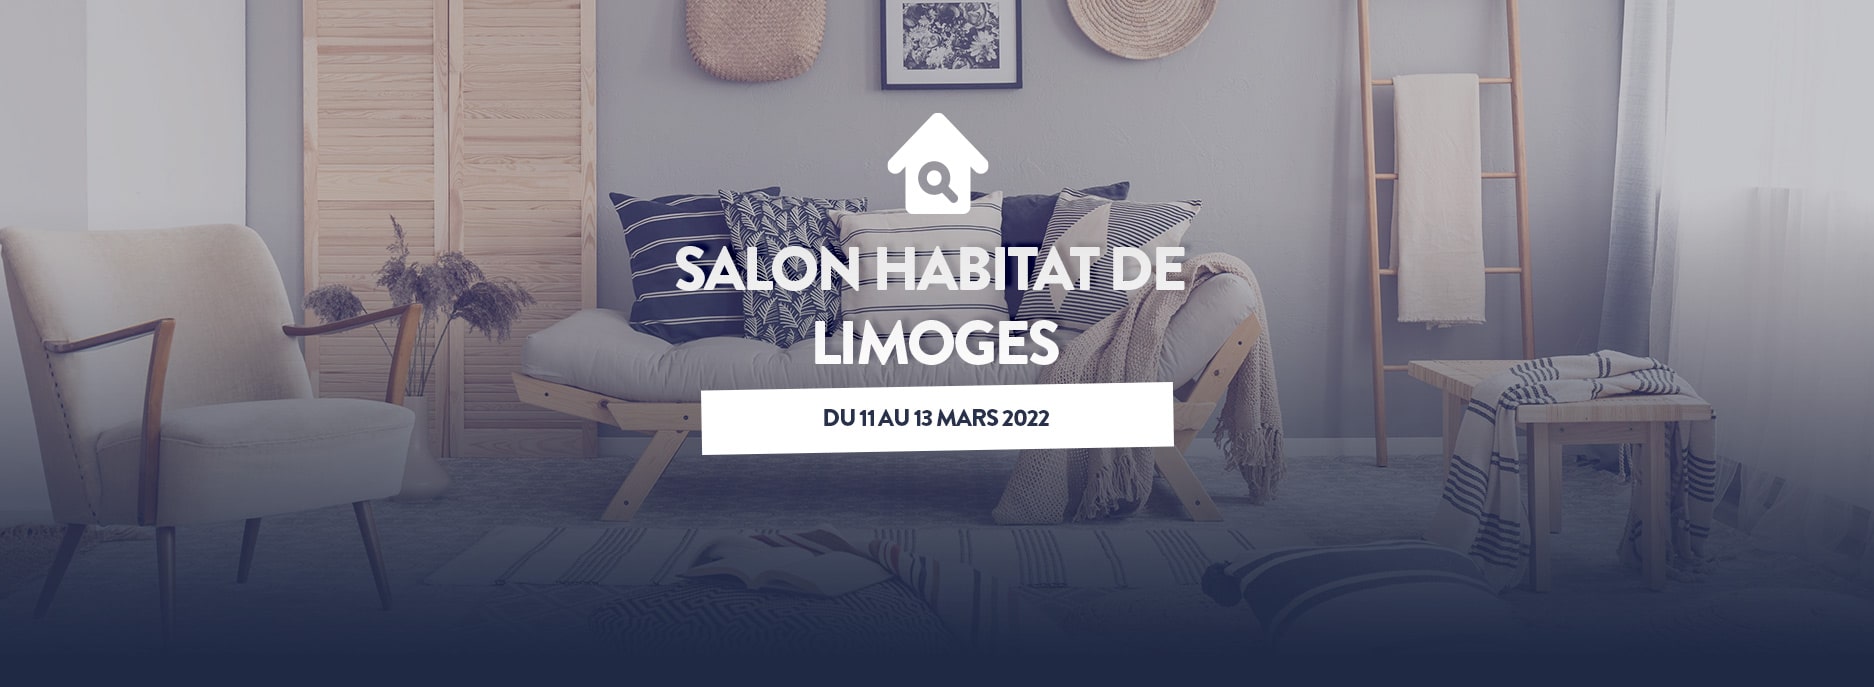 salon habitat 2022 limoges 87